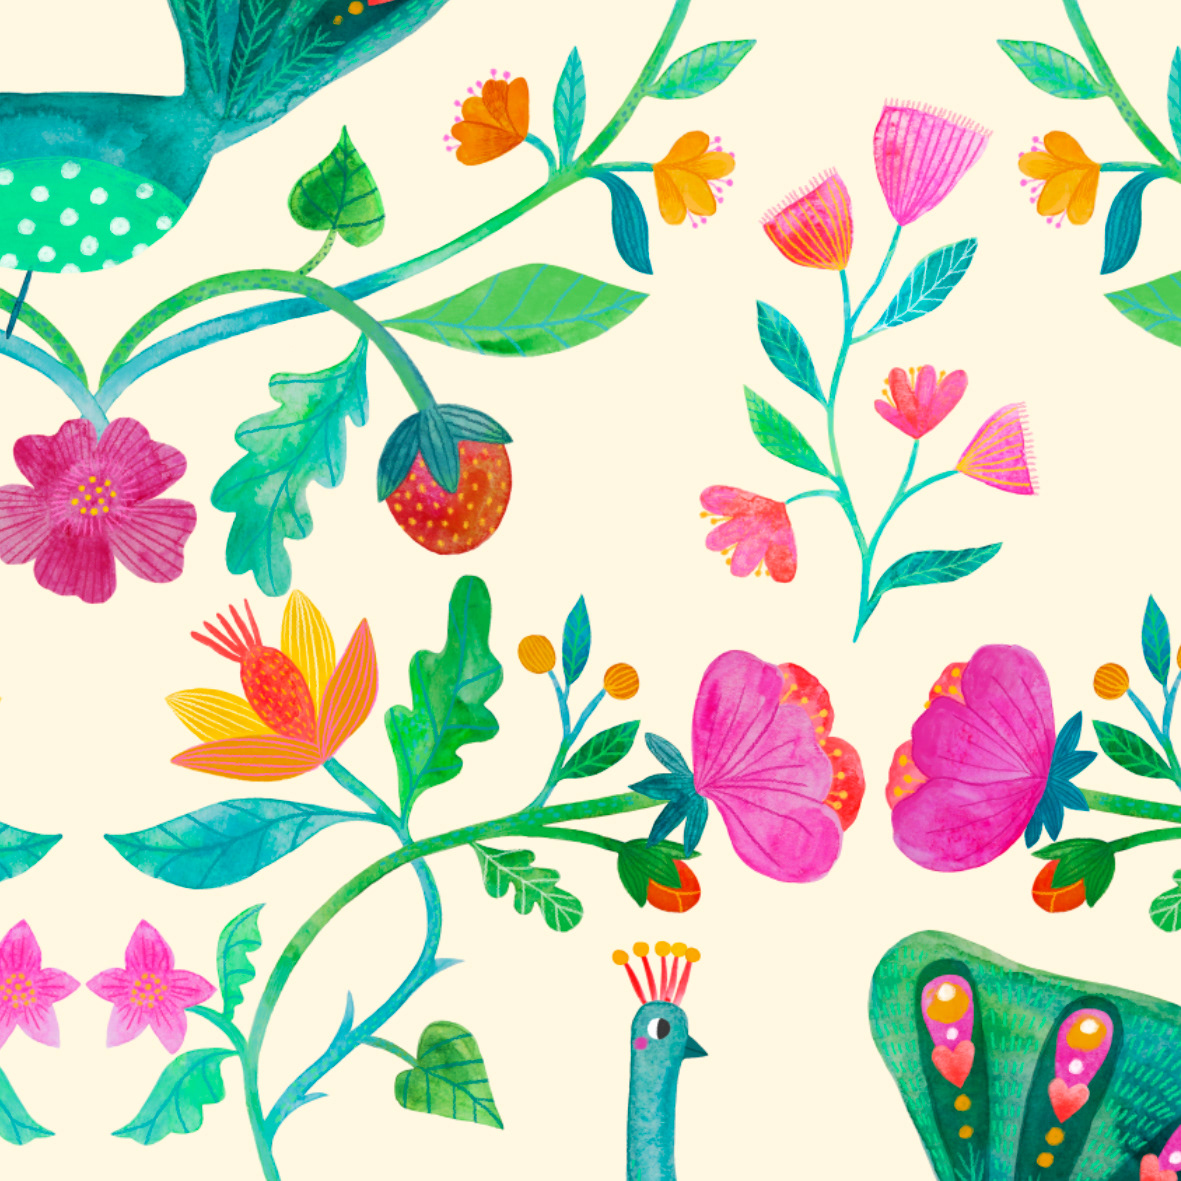 artwork digital illustration watercolor Flowers pattern textile fabric print